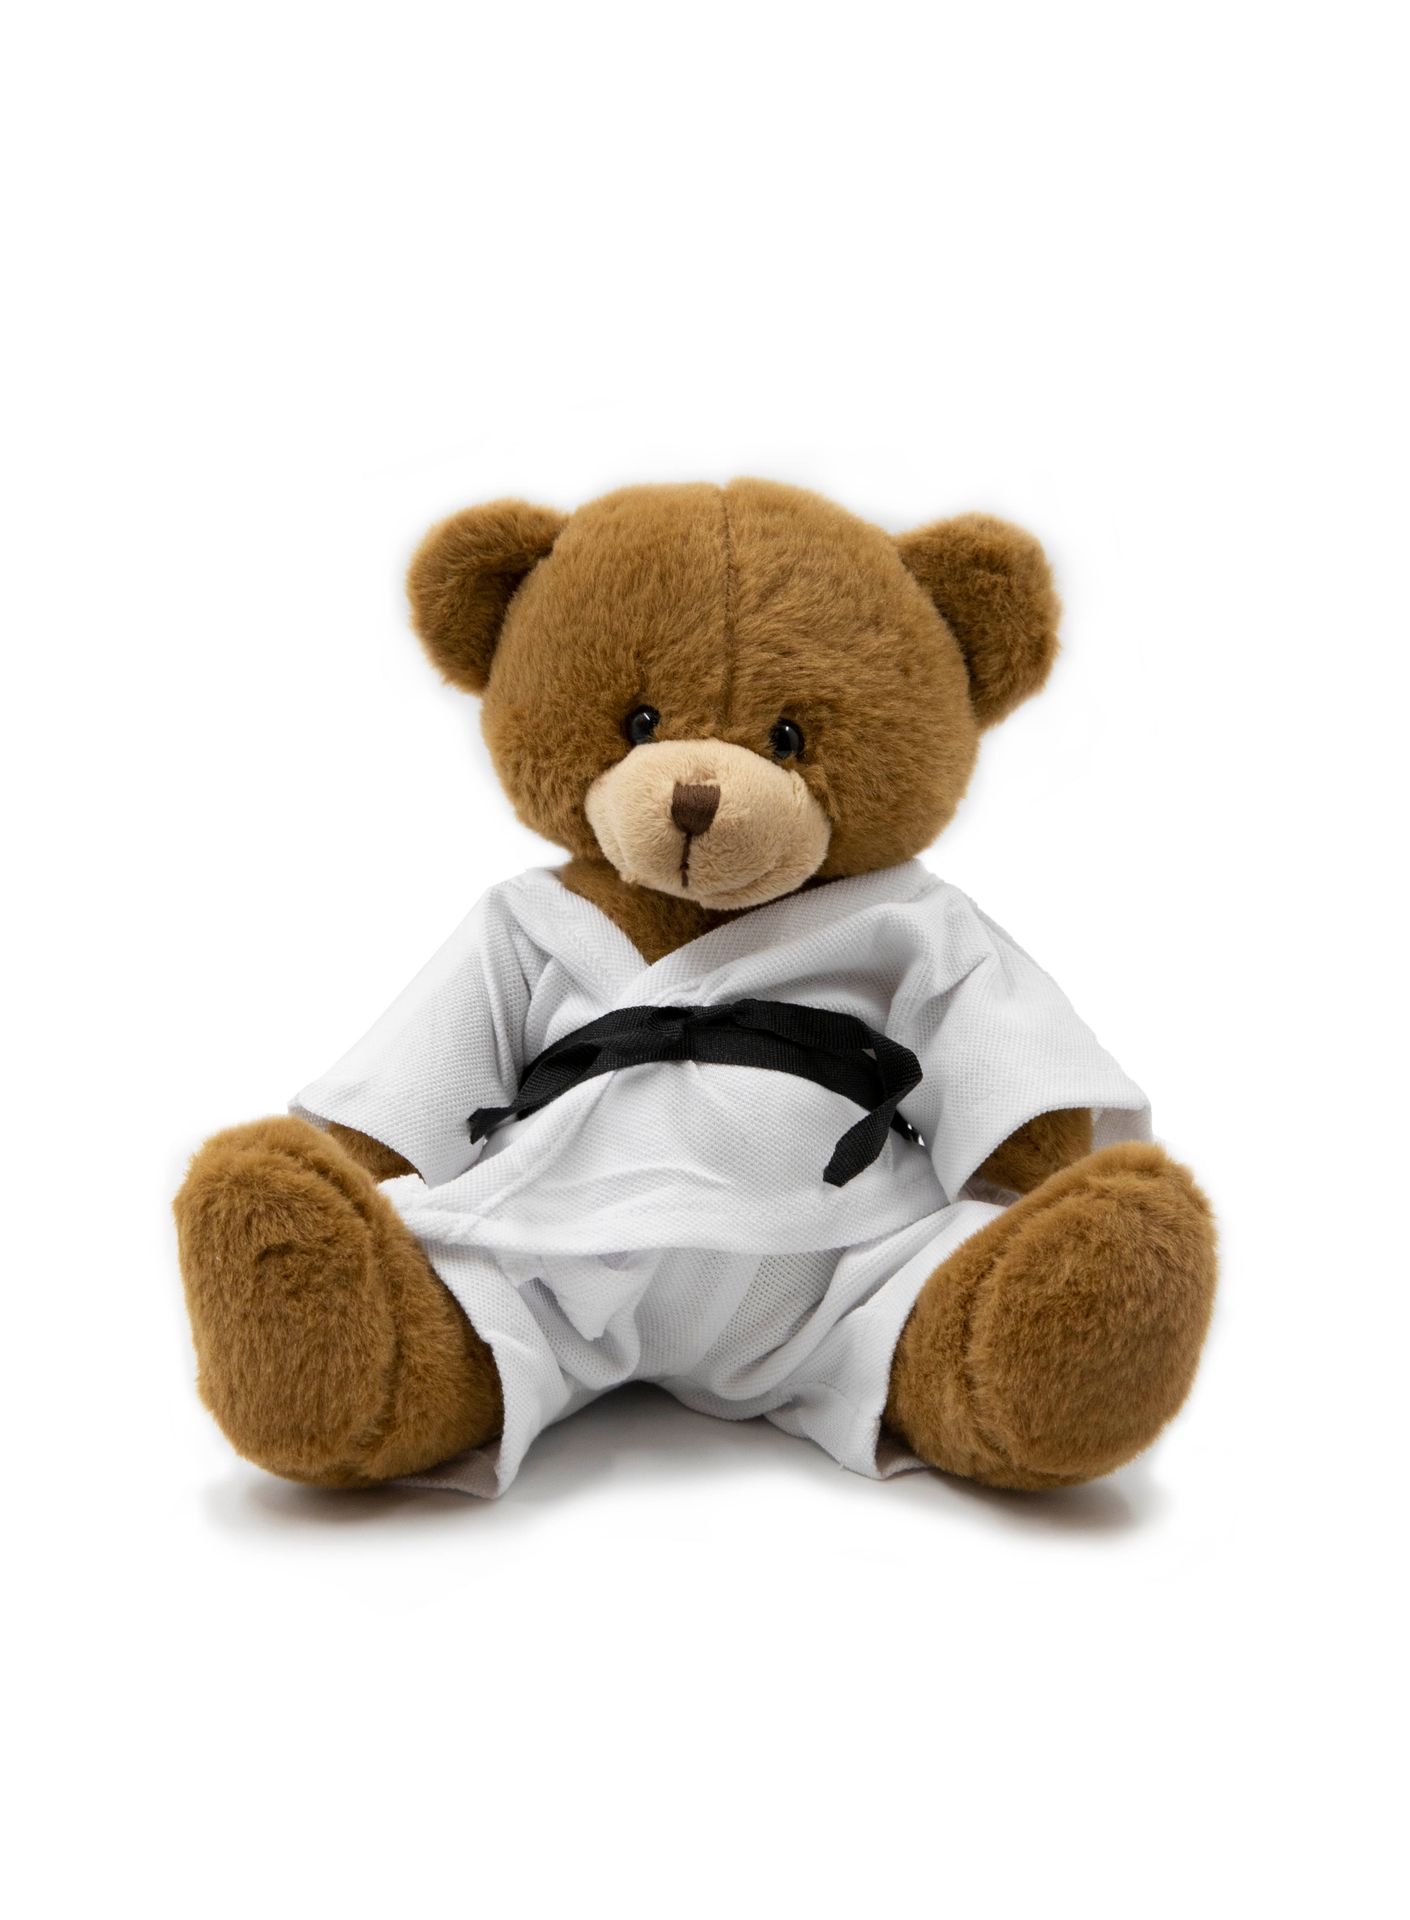 Teddy RINER 泰迪熊*。*泰迪-瑞纳的个性化献词